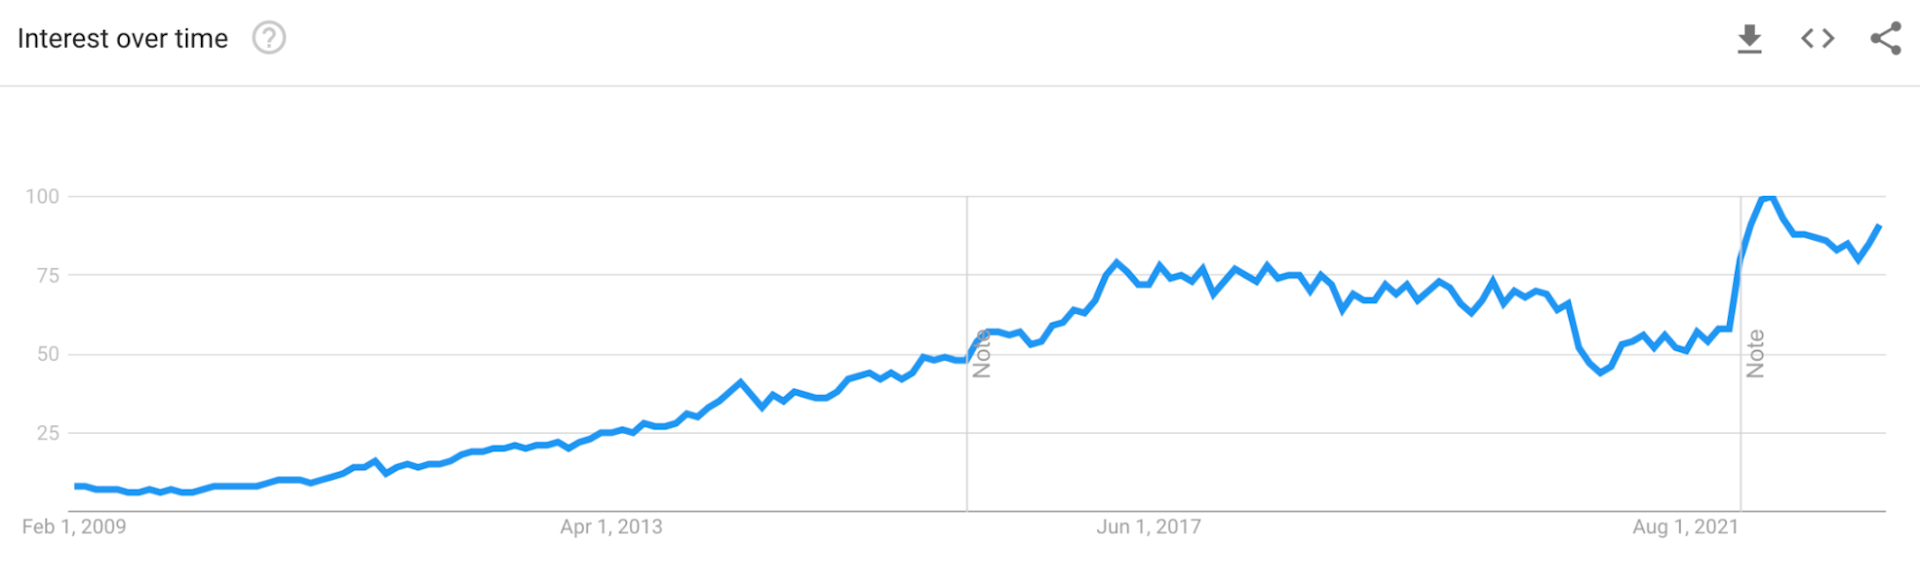 node-trends-over-time-google